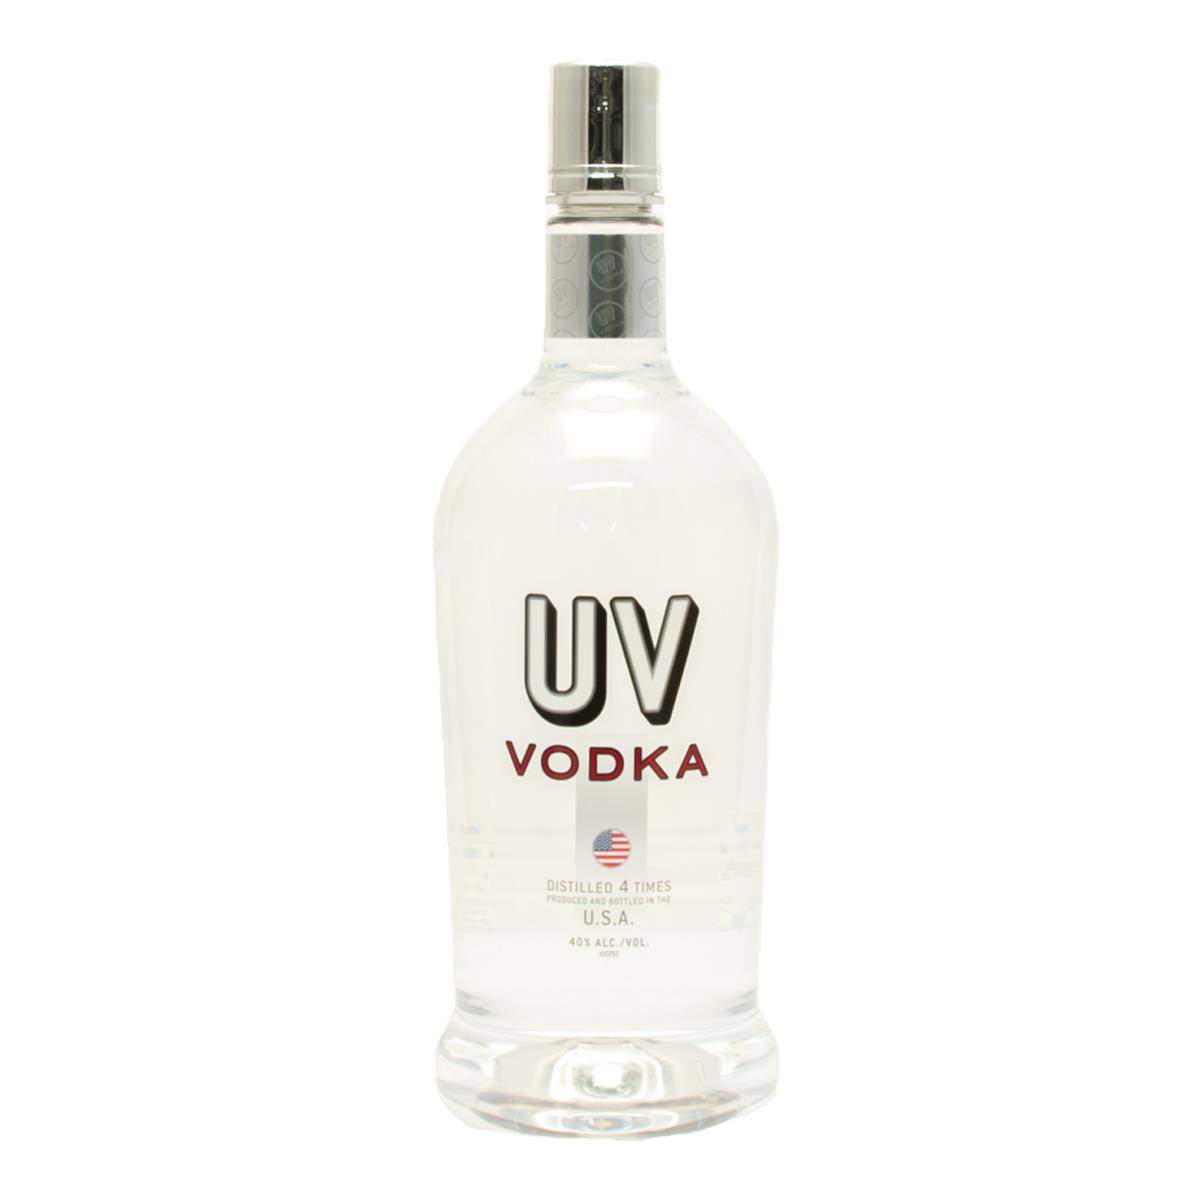 "UV Vodka - The Ultimate Choice in Spirit!" Wallpaper